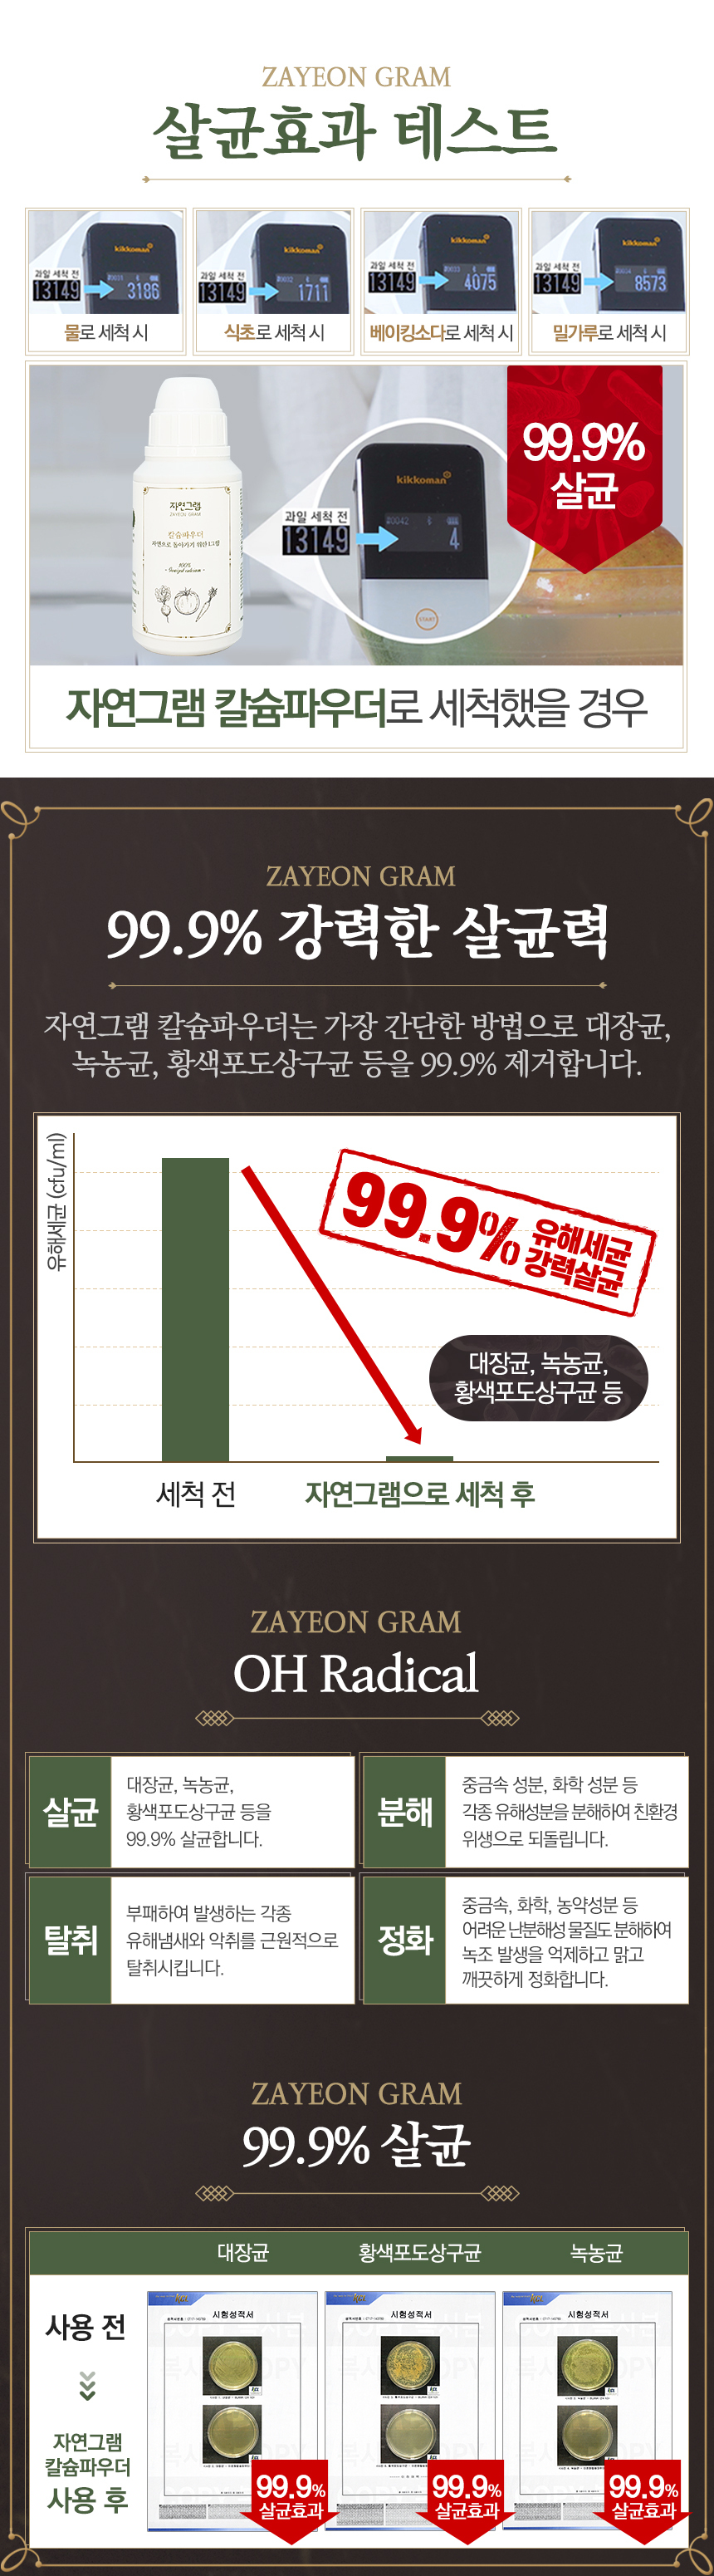 韓國食品-[Zayeon Gram] Calcium Powder 150g